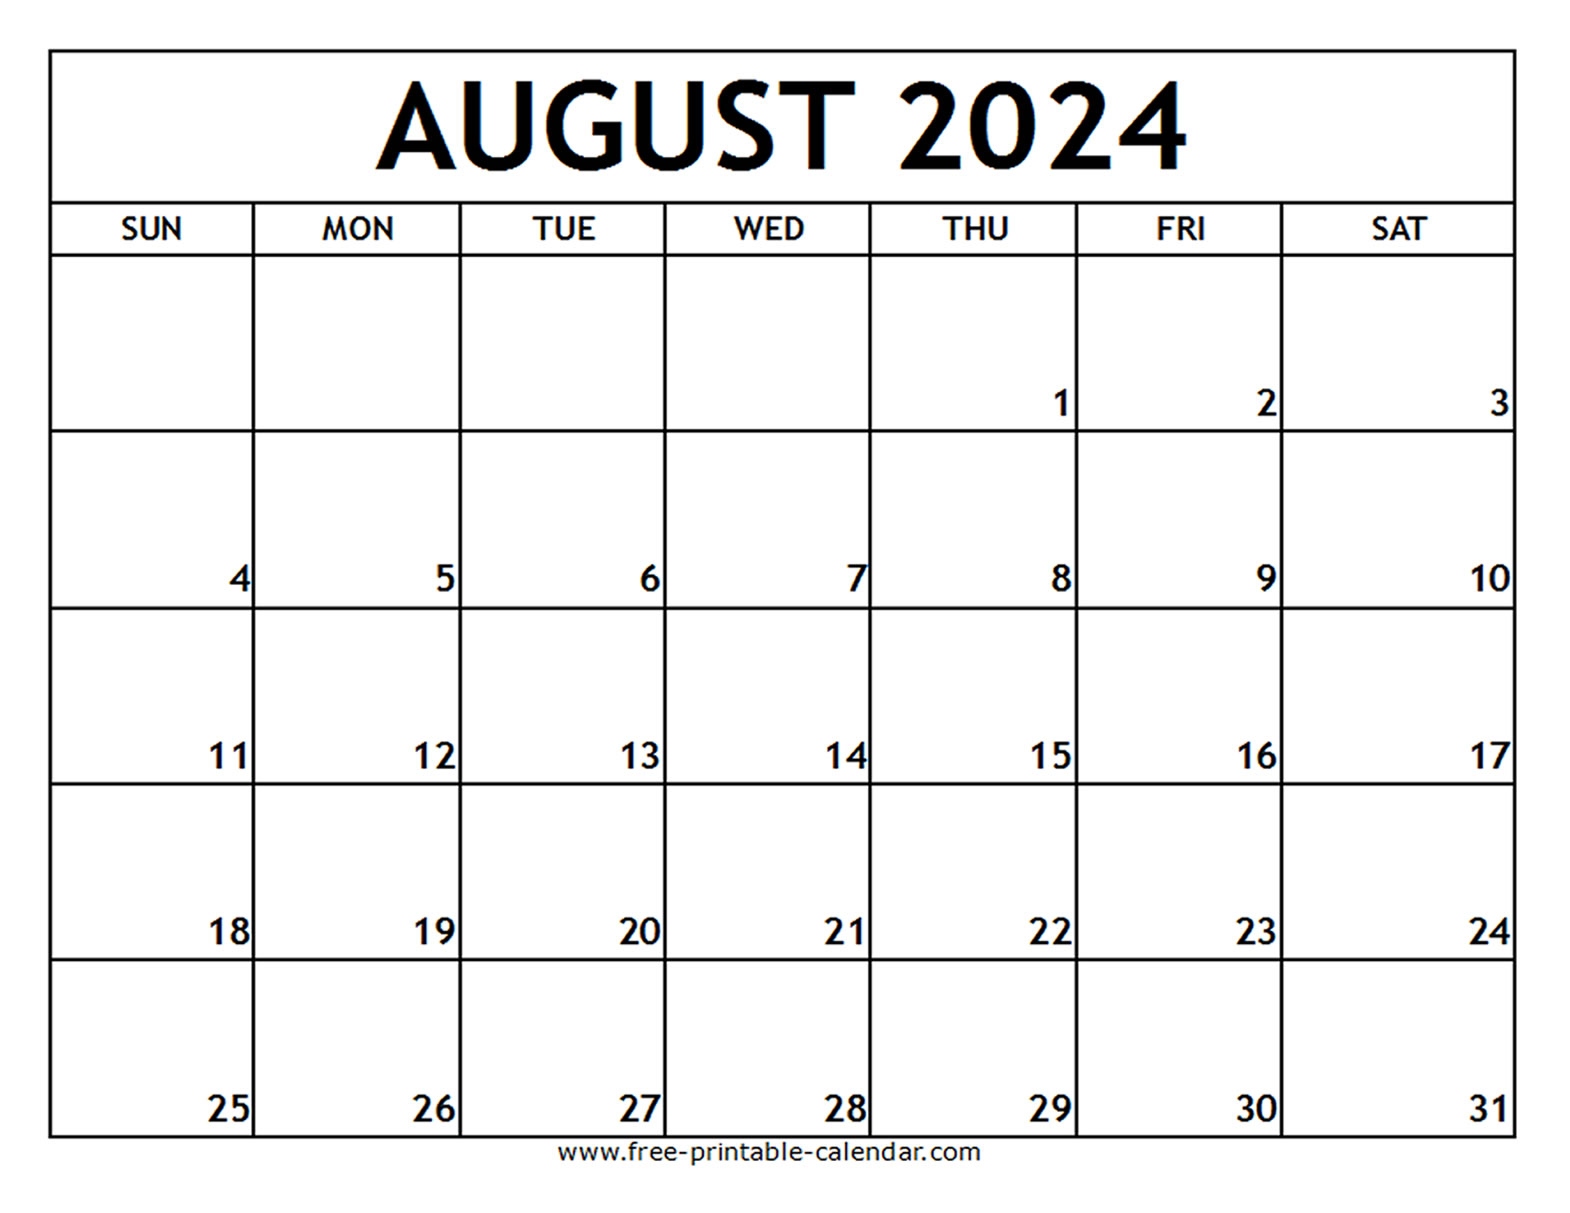 August 2024 Printable Calendar - Free-Printable-Calendar for Free Printable Calendar Aug 2024